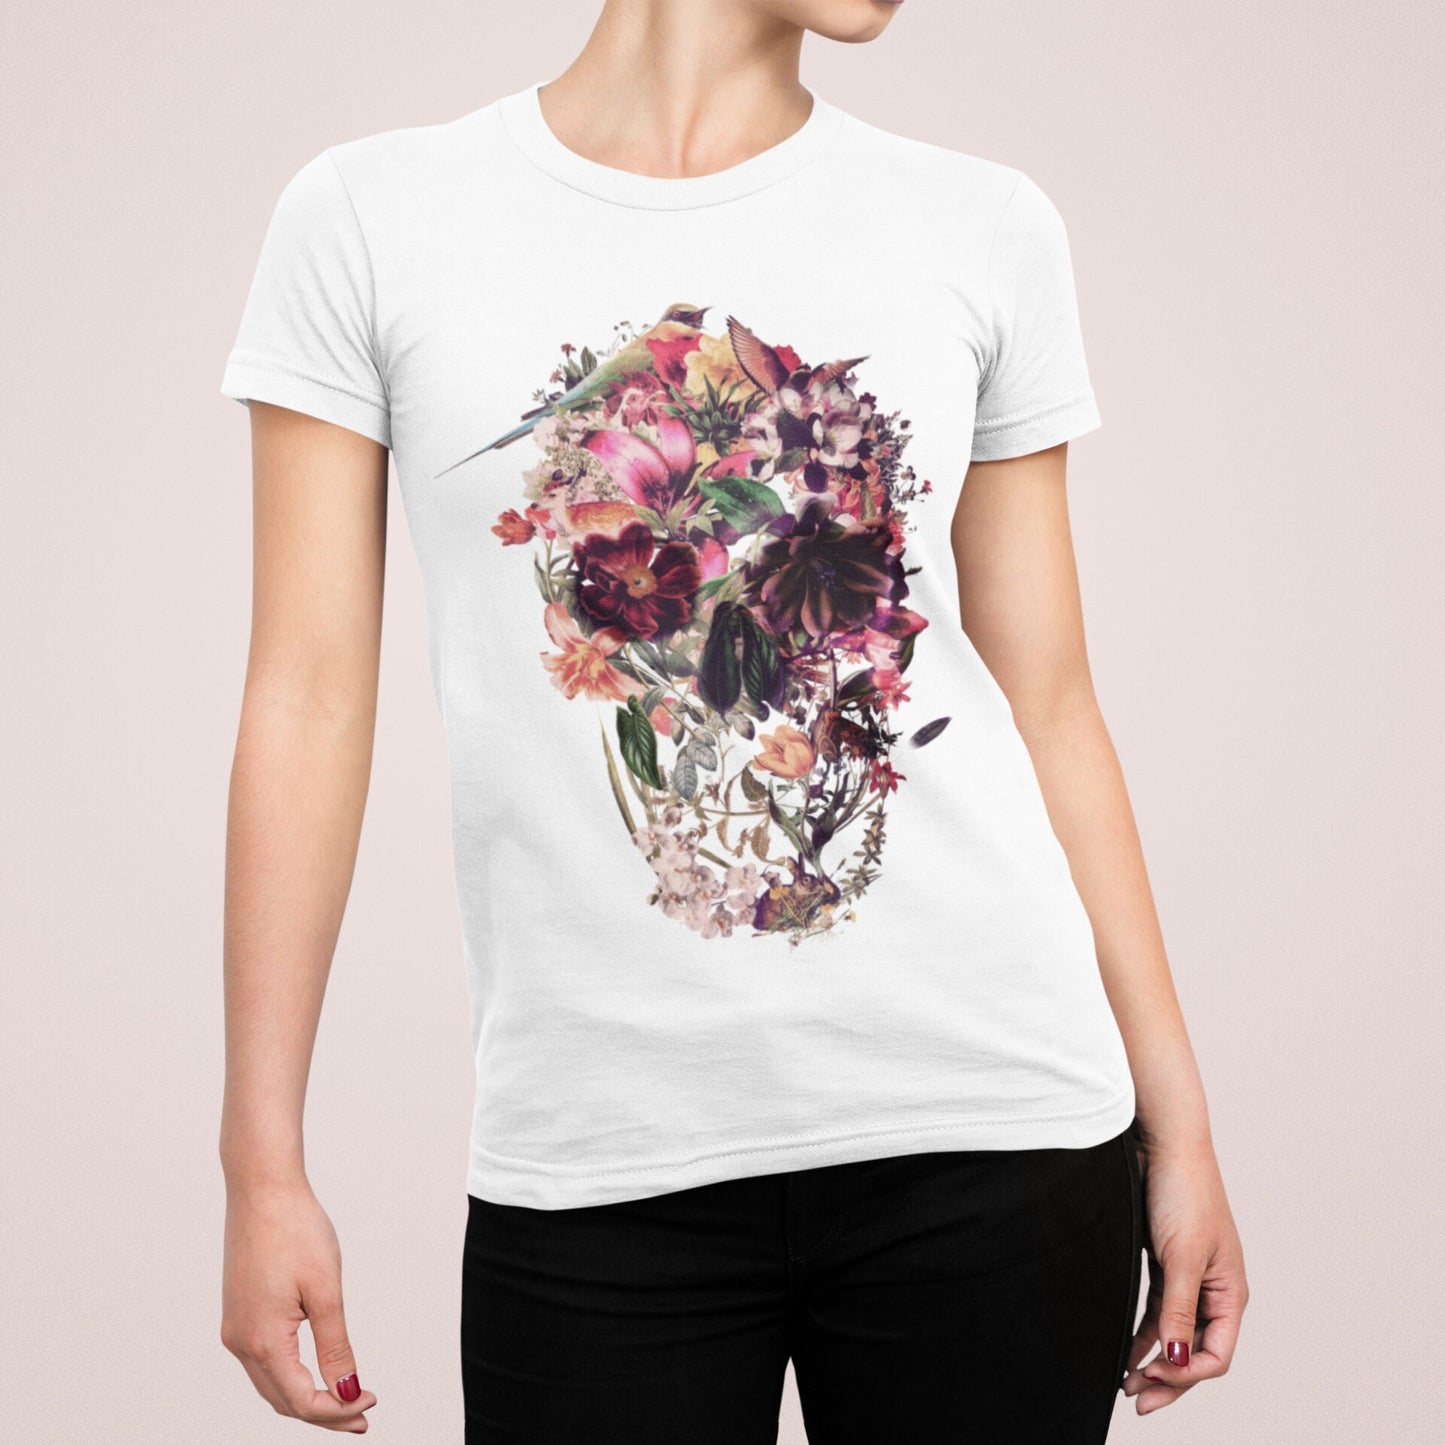 Flower Skull Print Womens T shirt, Sugar Skull Art Tshirt Gift For Her, Floral Skull Print Boho Graphic Tee, Bella Canvas T-Shirt